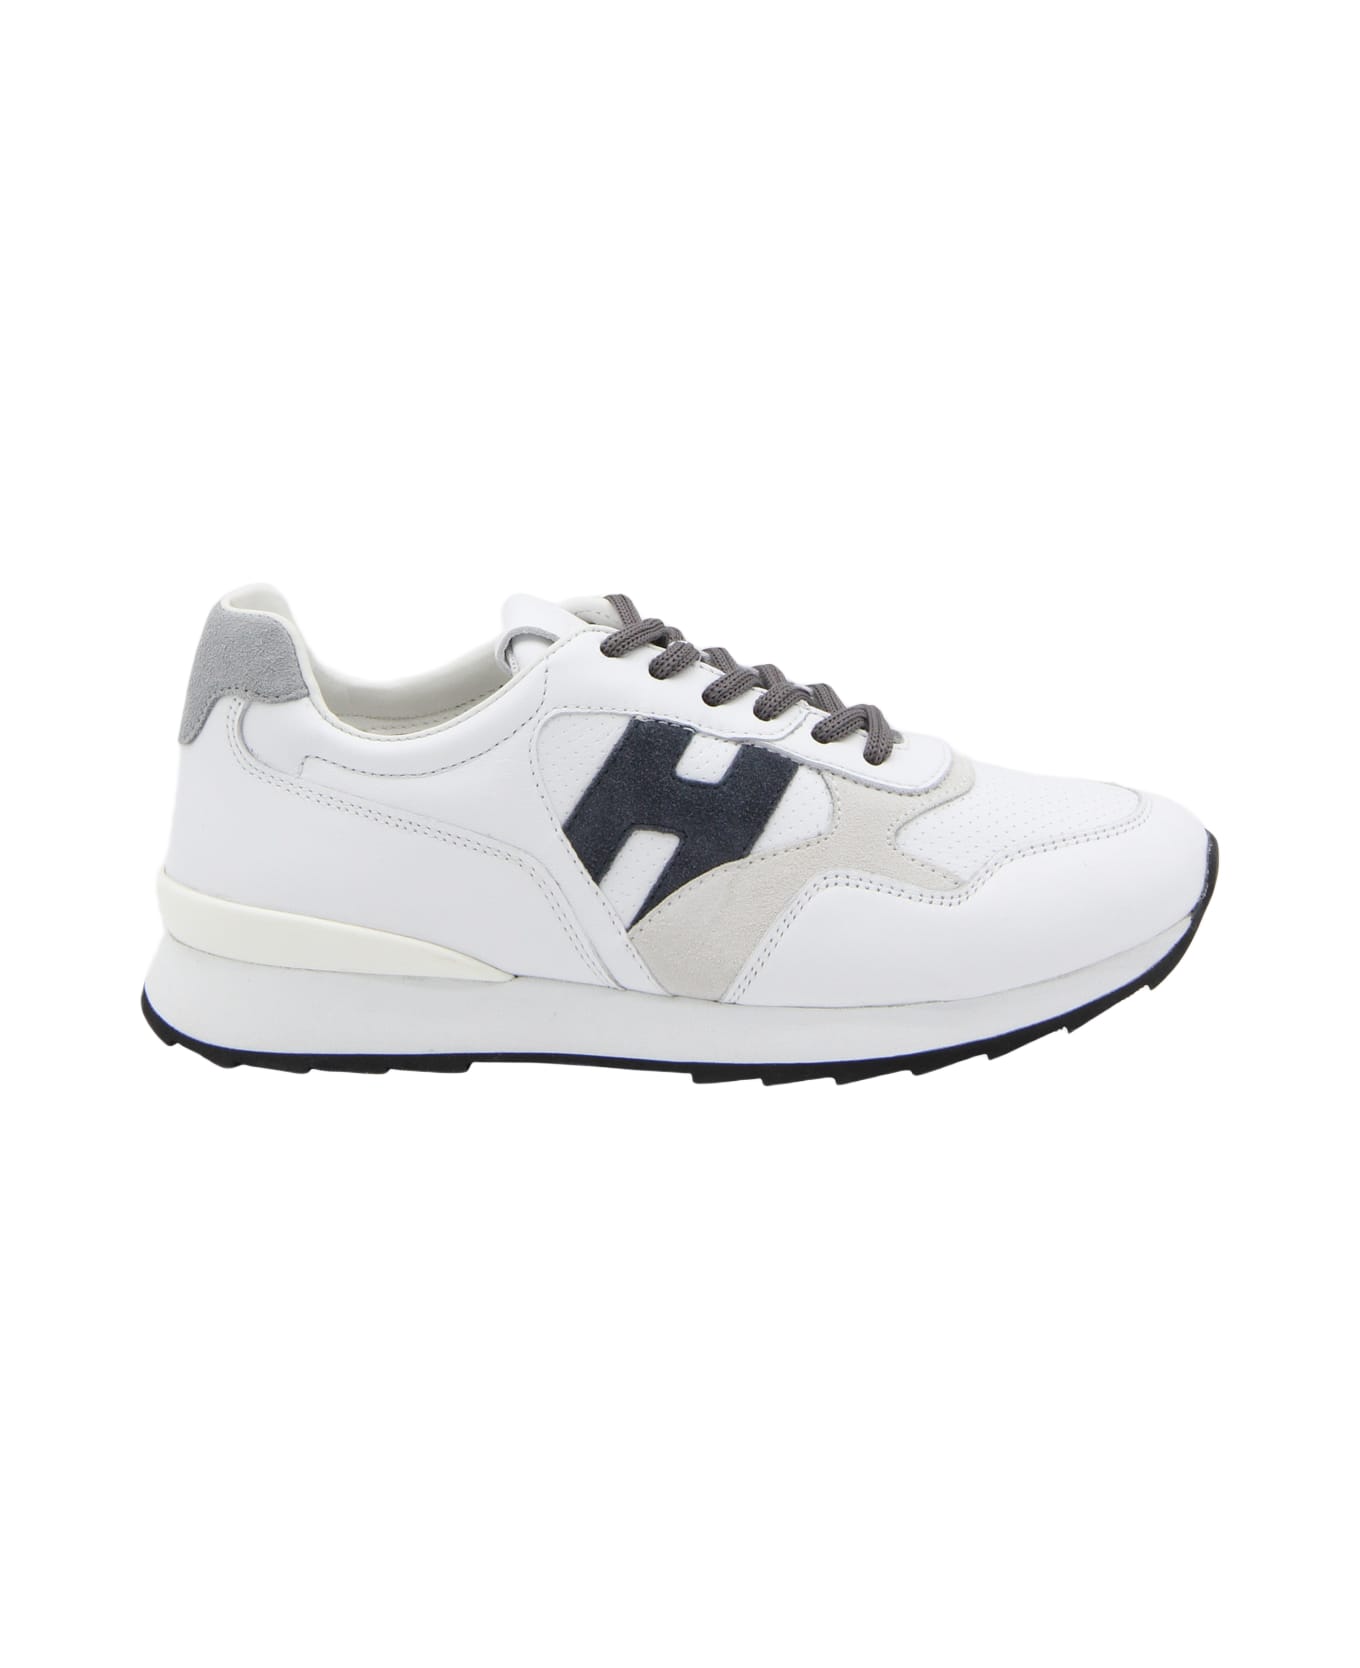 Hogan White Leather R261 Sneakers - White